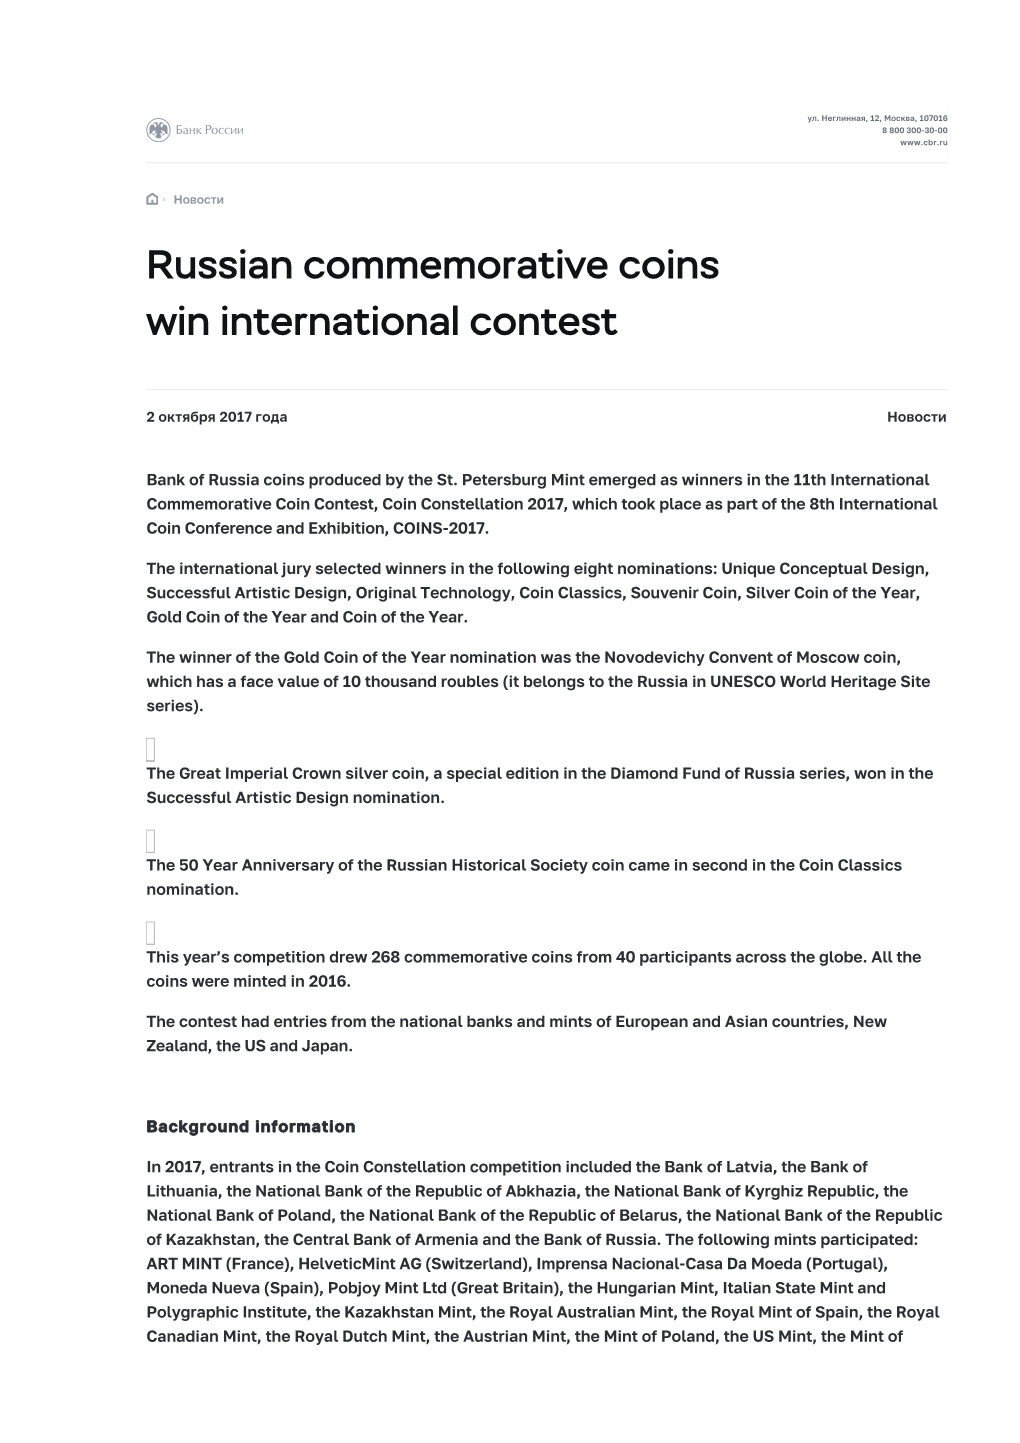 Russian Commemorative Coins Win International Contest | Банк России